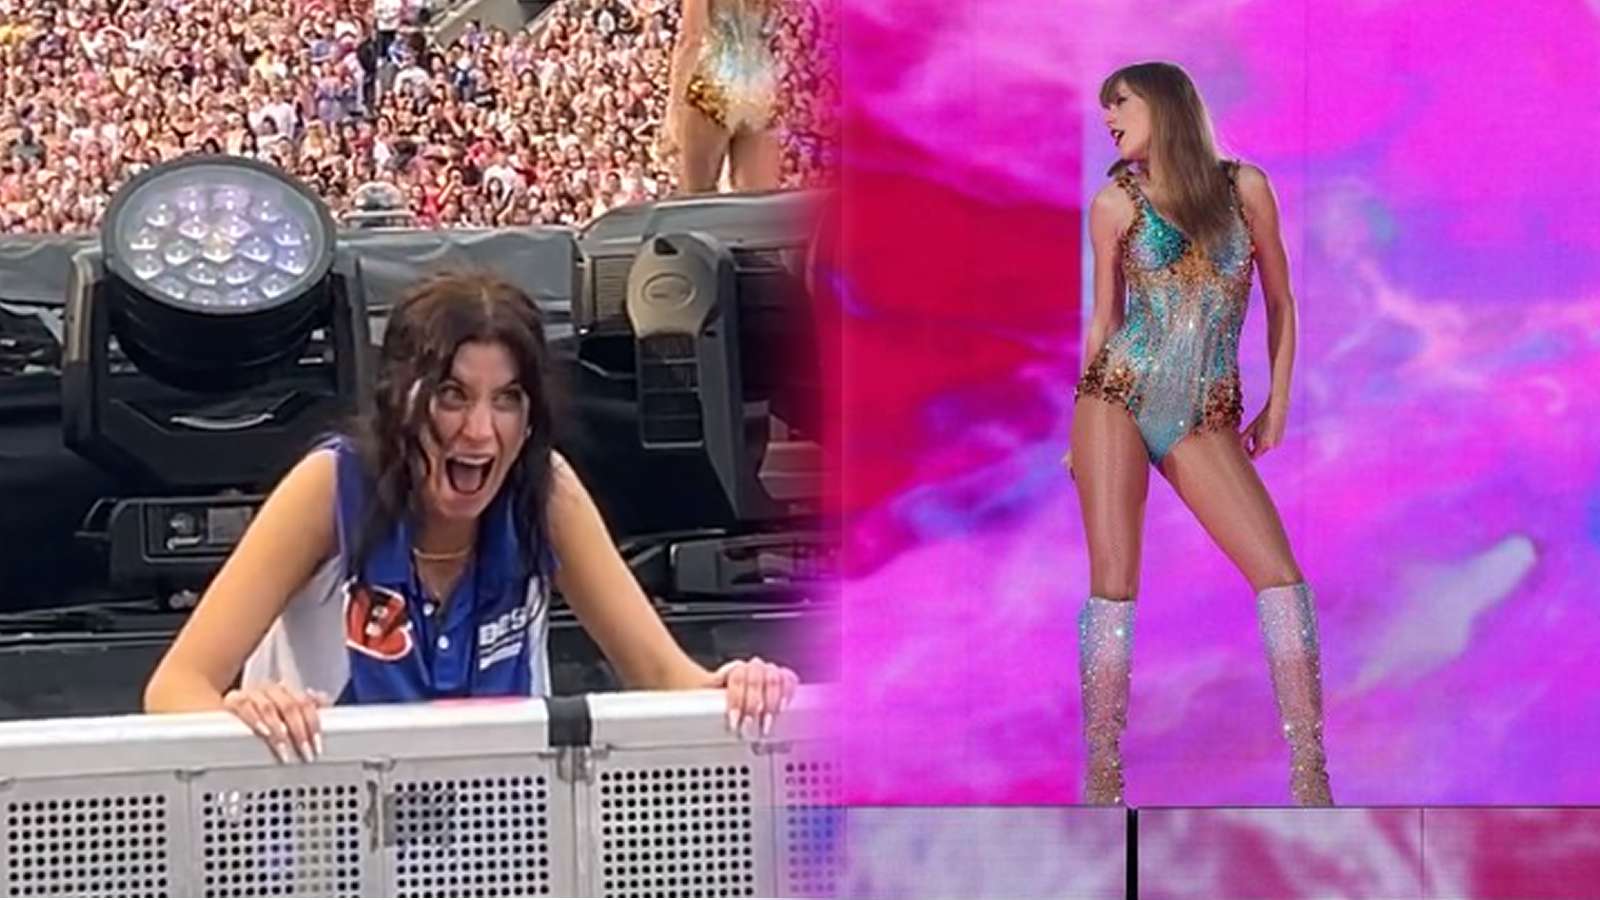 TikToker captures security guard hilariously celebrating during Taylor Swift concert